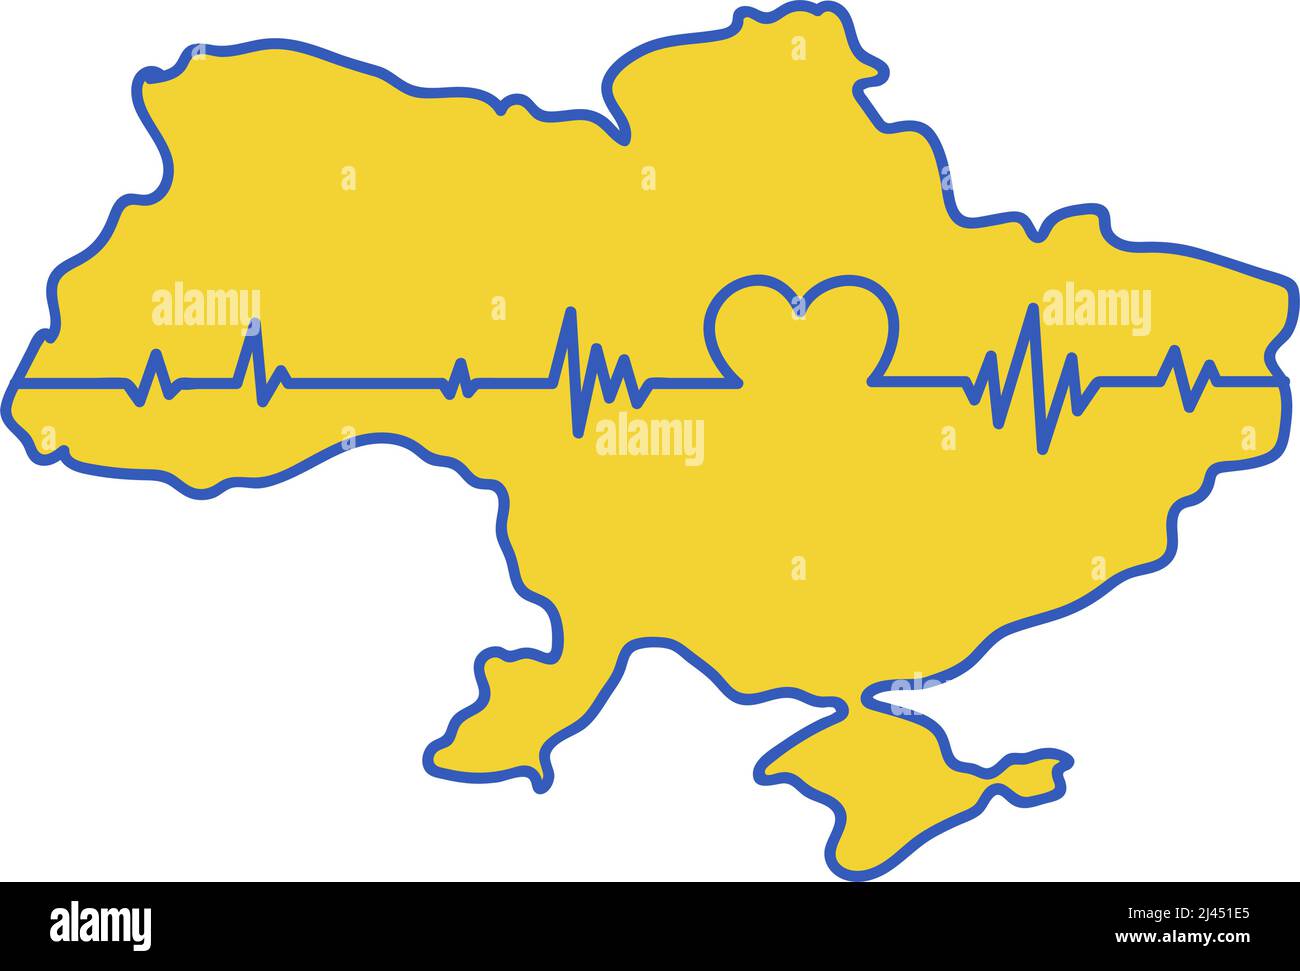 Stop War in Ukraine concept vector illustration. Heart, love for Ukraine, Ukrainian flag and map illustration. Save Ukraine from Russia. Stock Vector